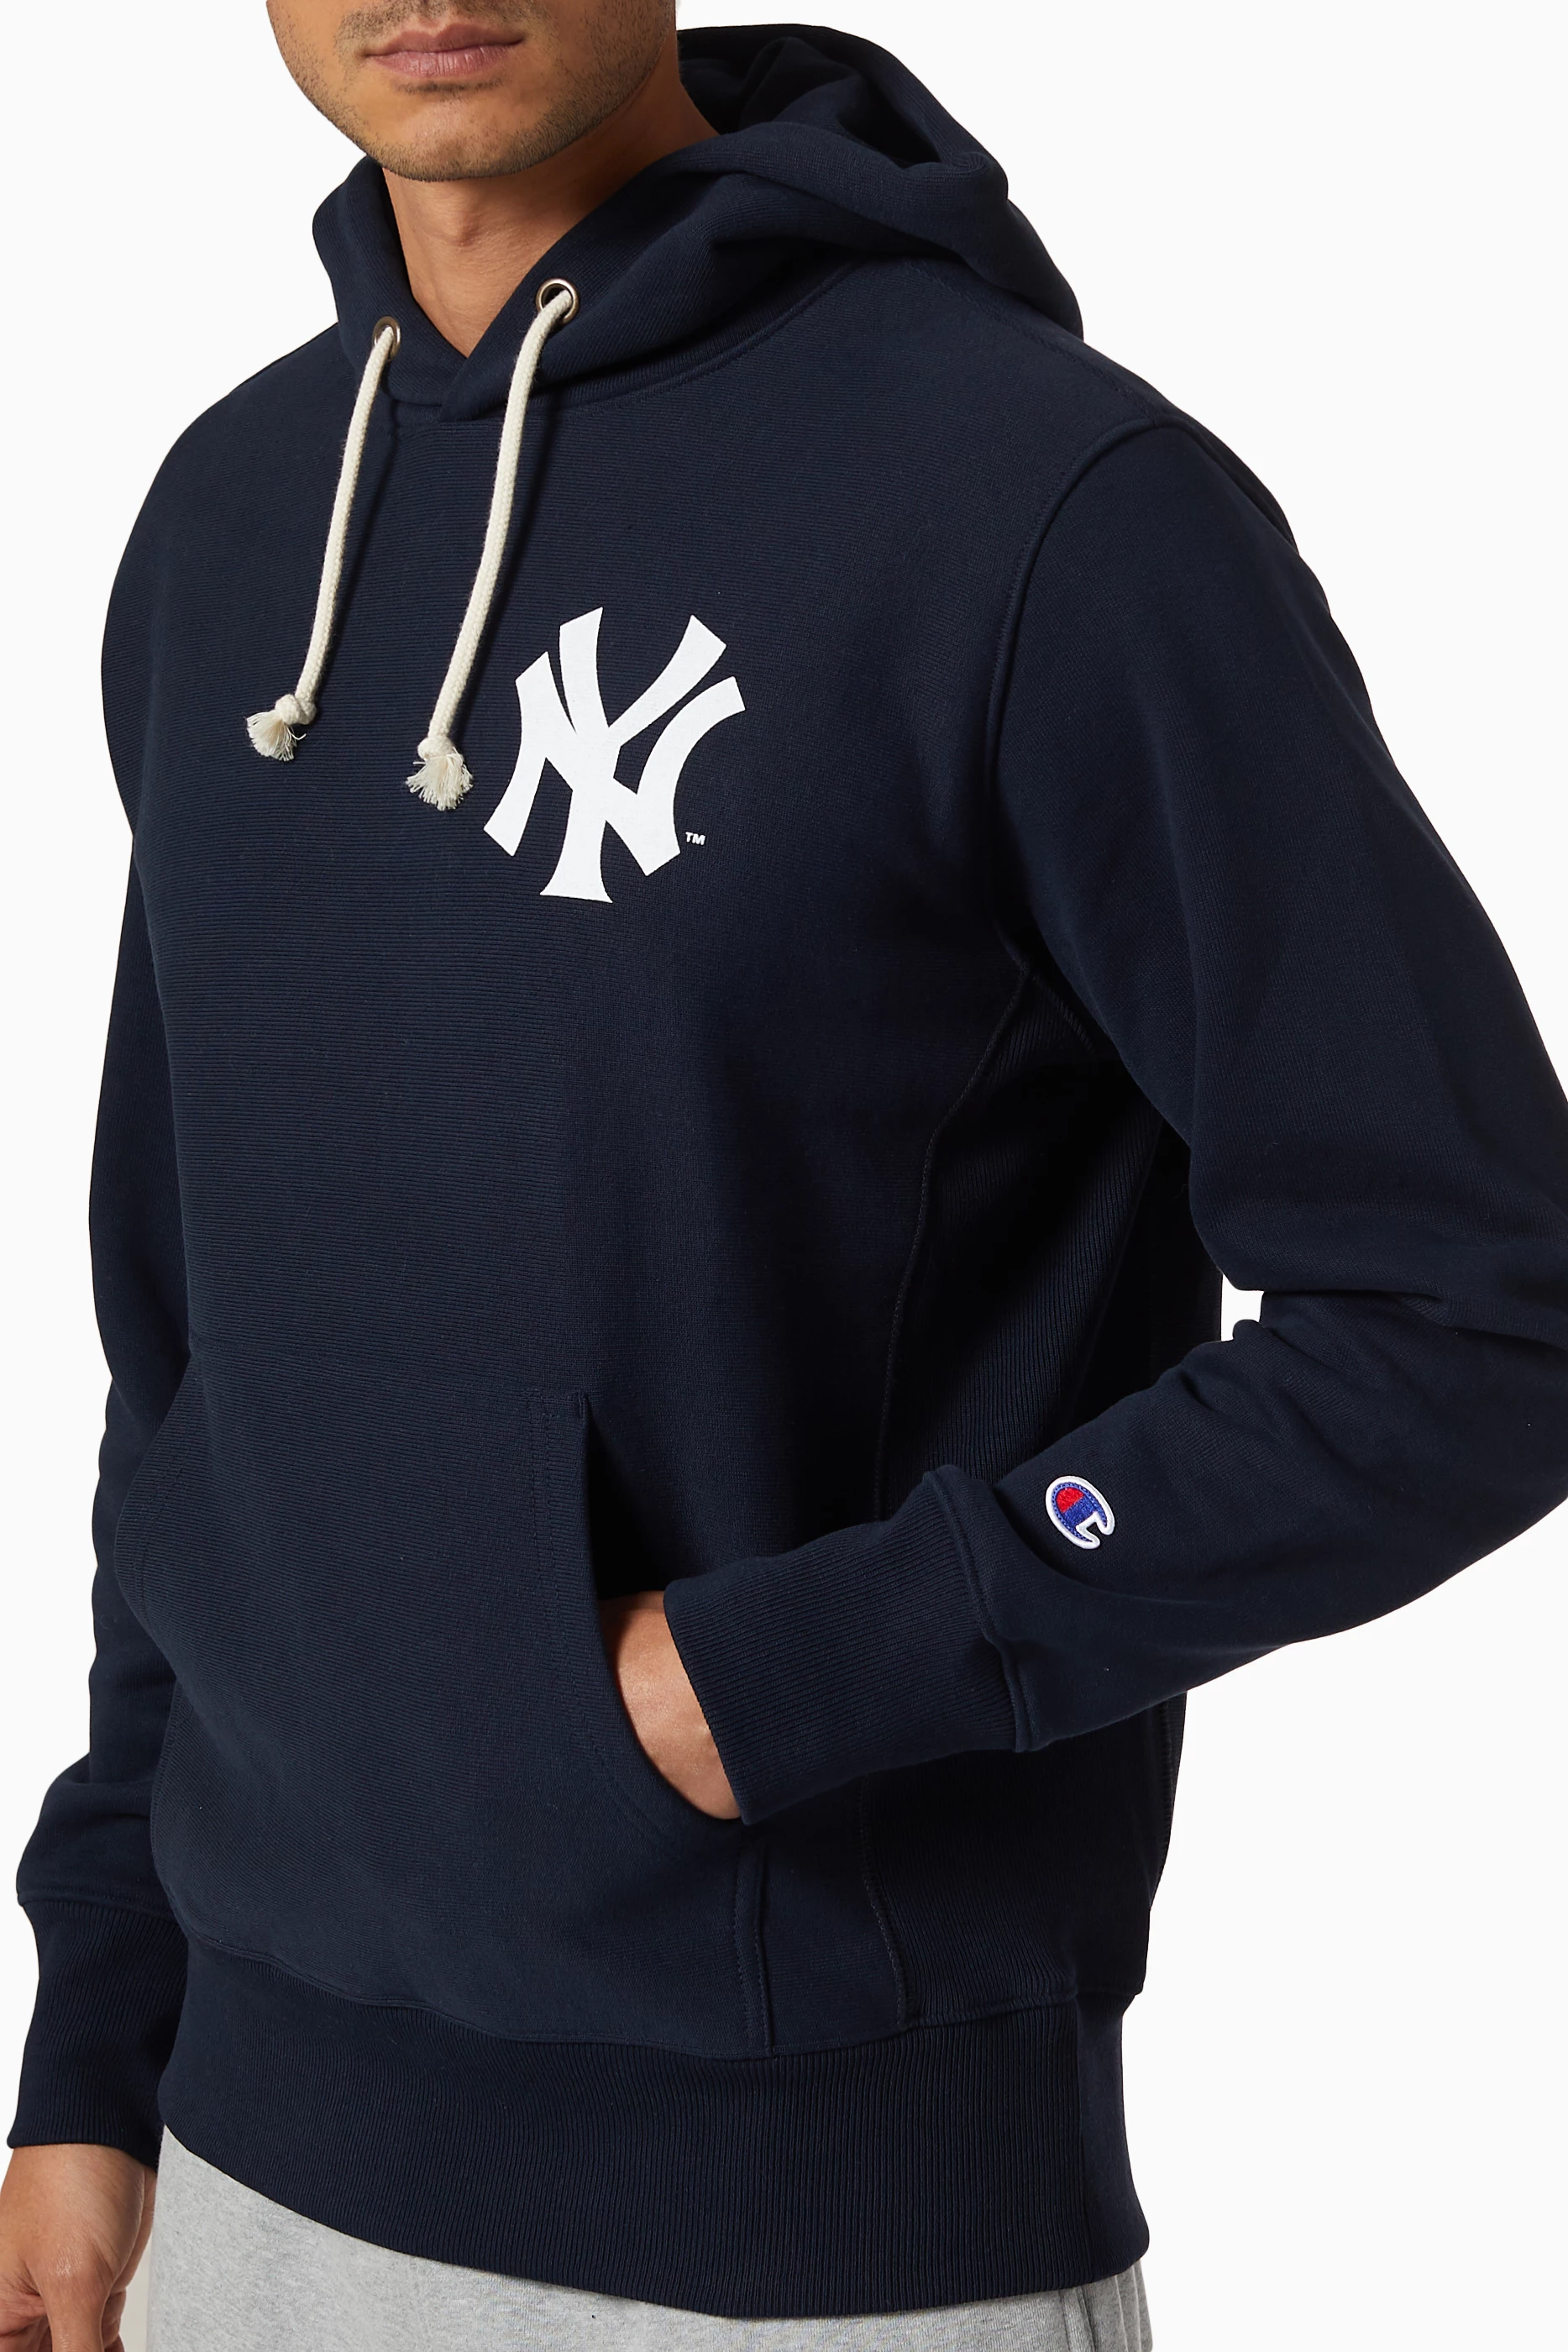 Hooded sweatshirt Champion MLB New York Yankees